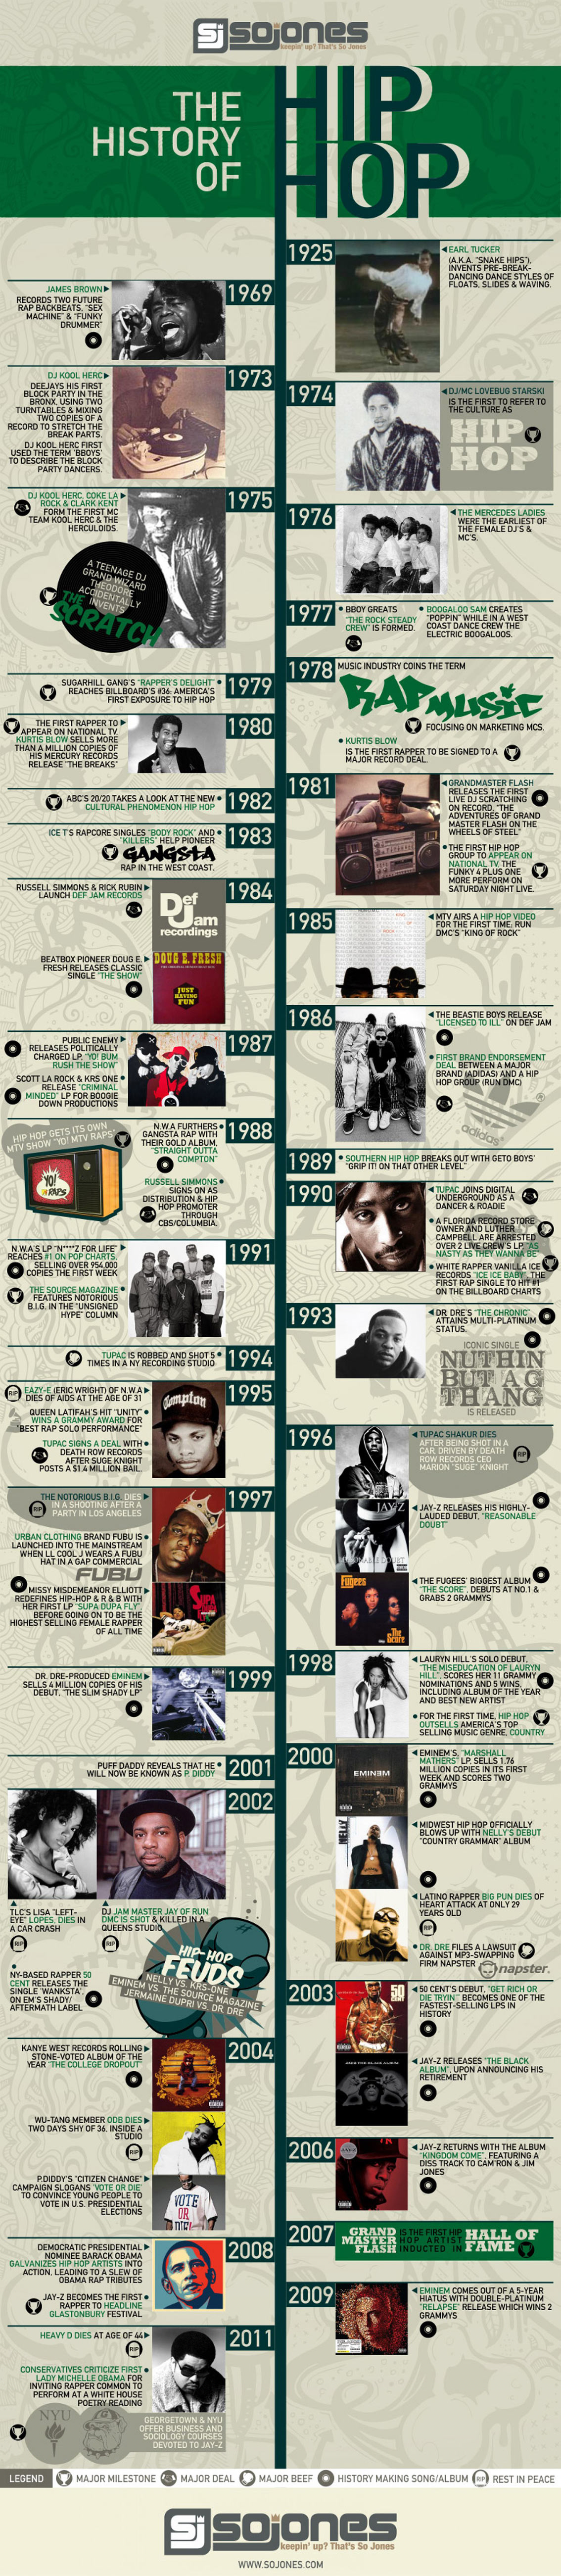 History of Hip Hop Timeline Infographic